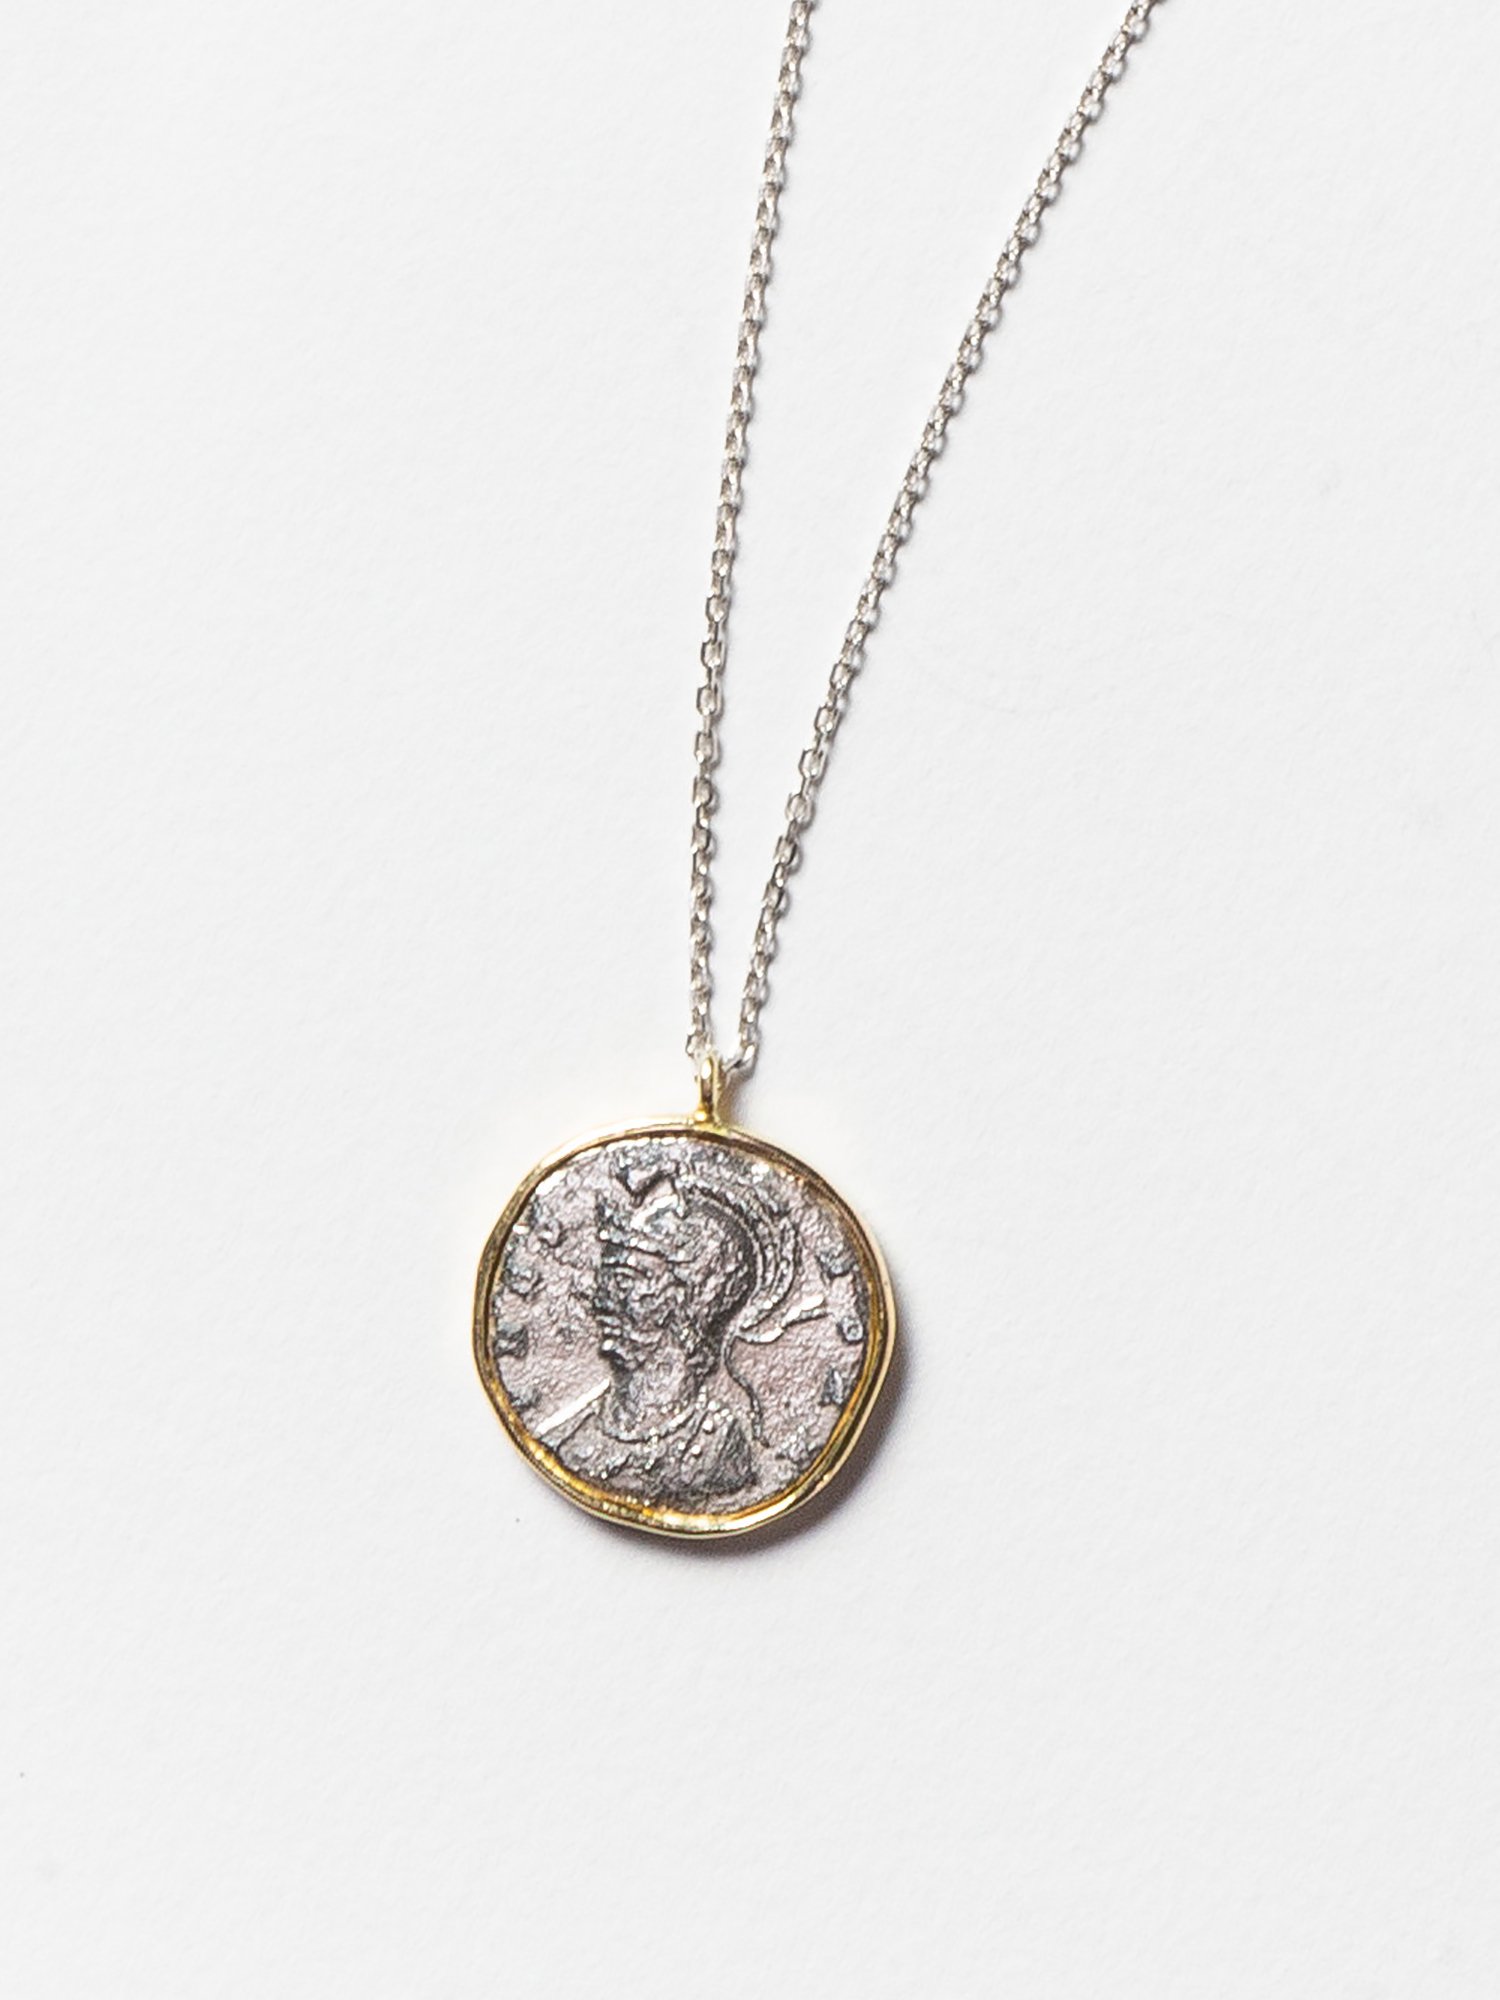 ARTEMIS / Roman coin necklace / Romulus and Remus - GIGI Jewelry